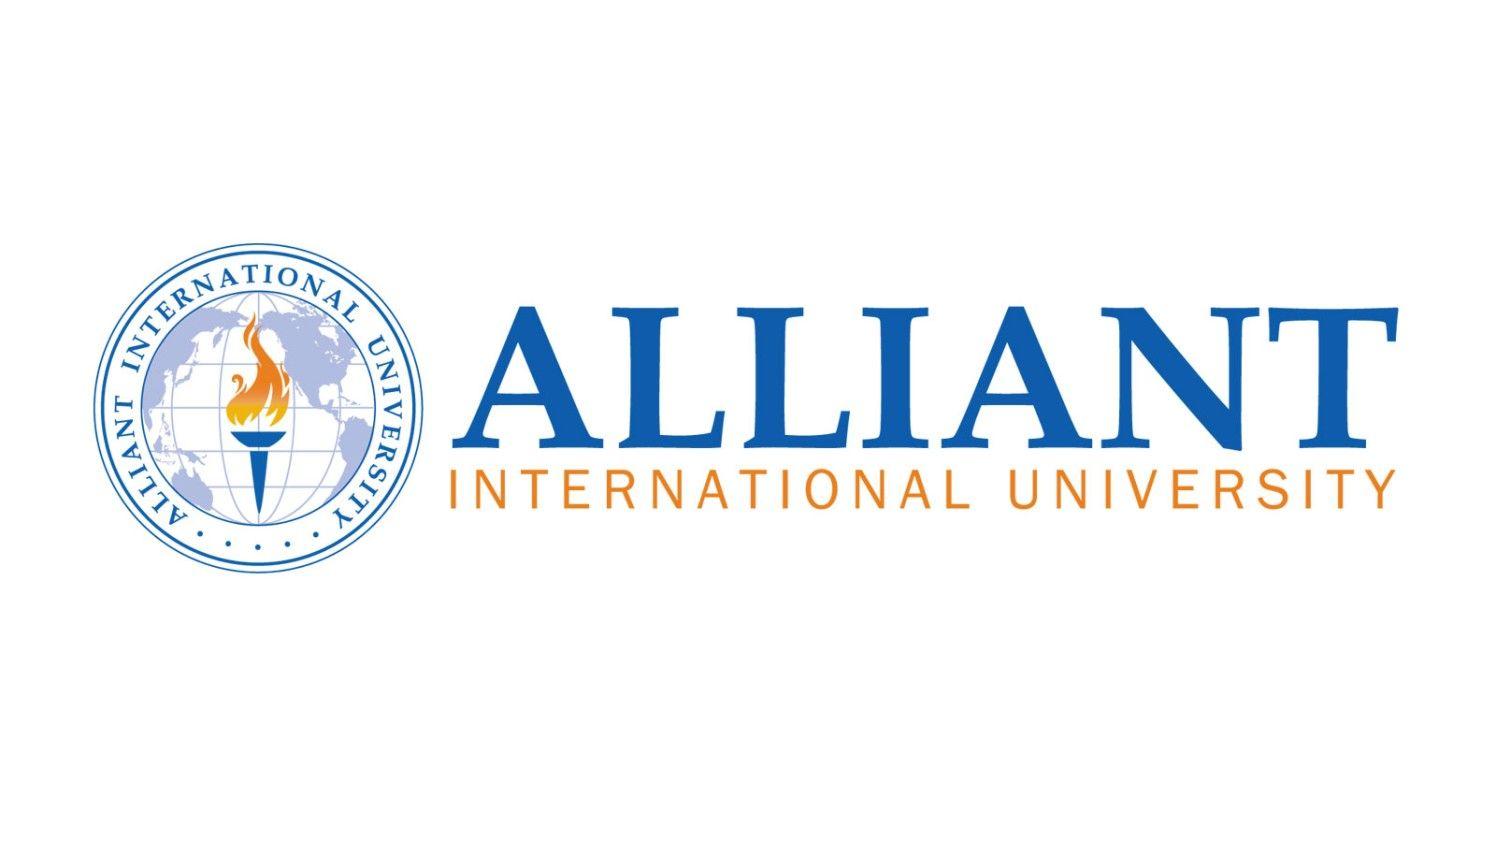 Alliant Logo - Bertelsmann Expands Education Activities to Advance Innovation